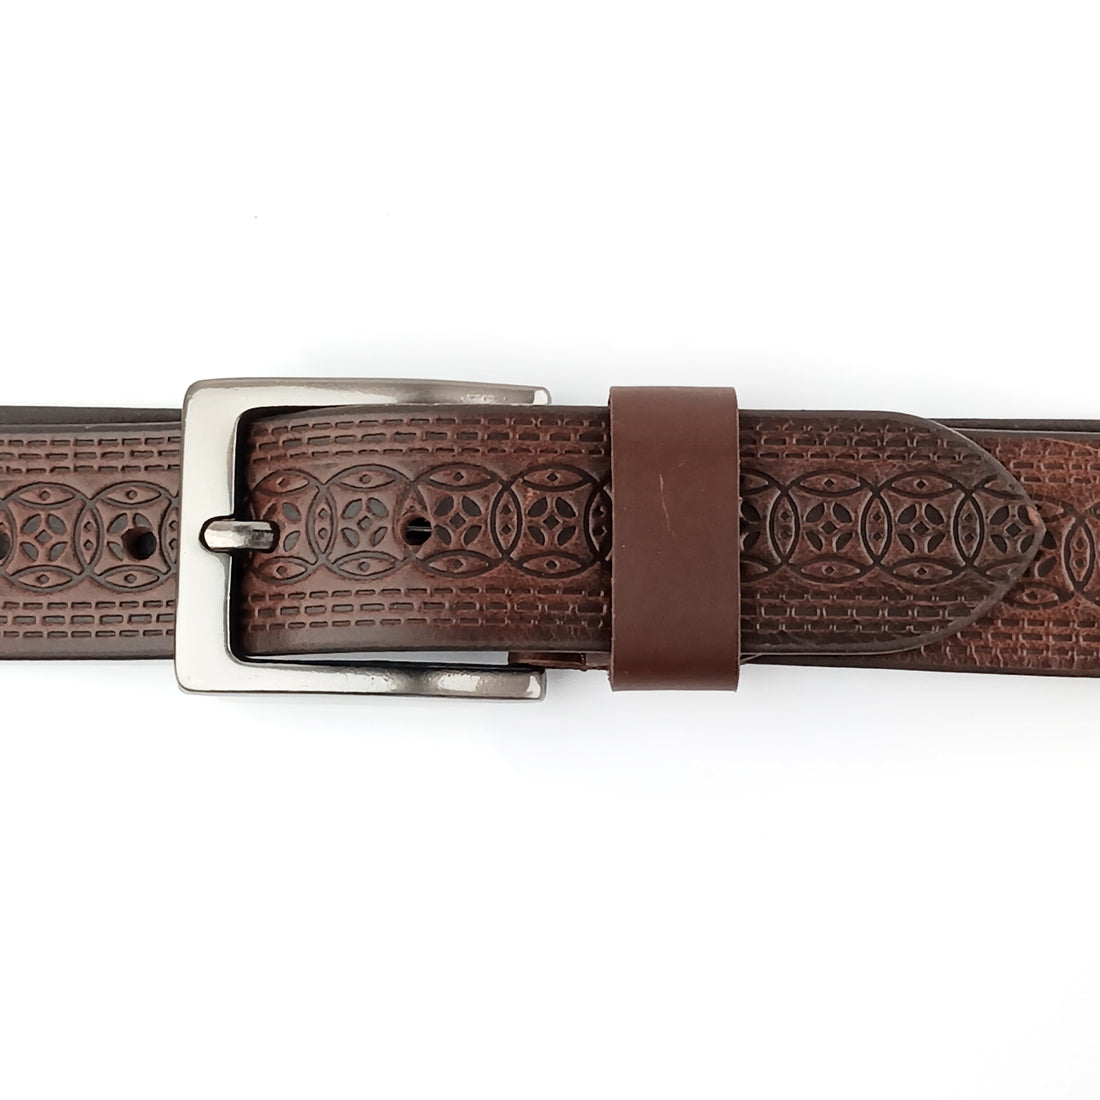 Ficuster Men Dark Brown Genuine Leather Belt